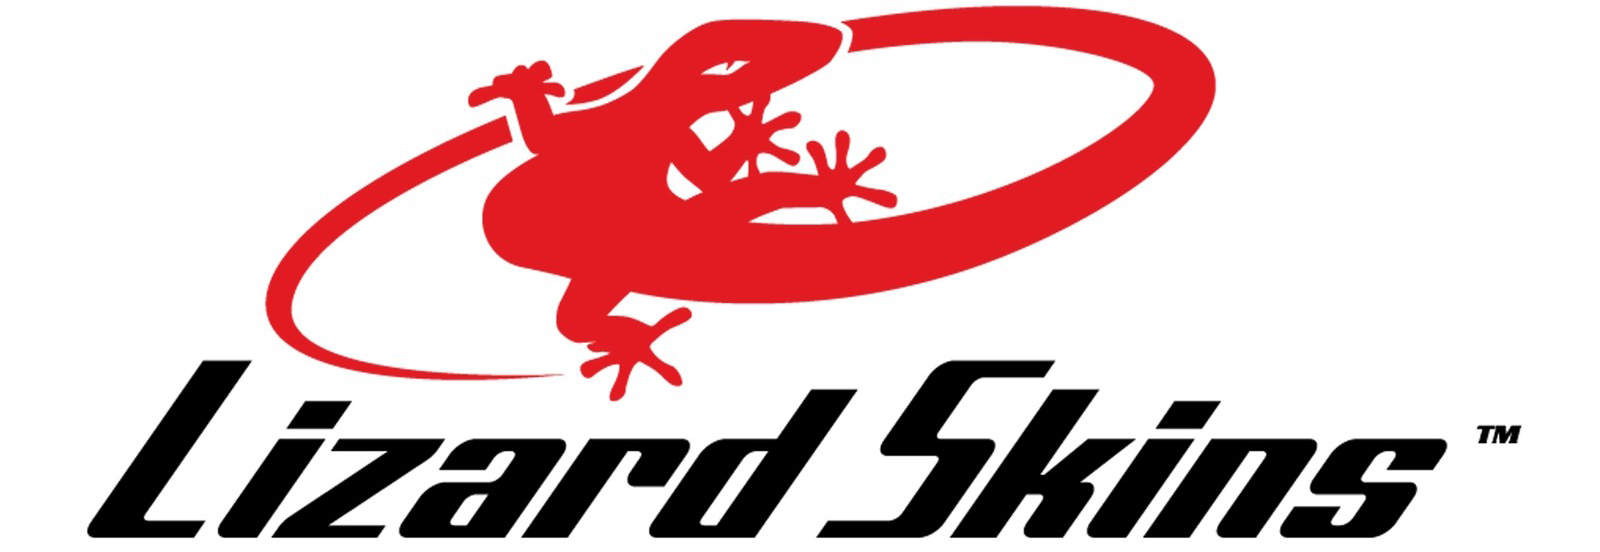 Logo: Lizard Skins